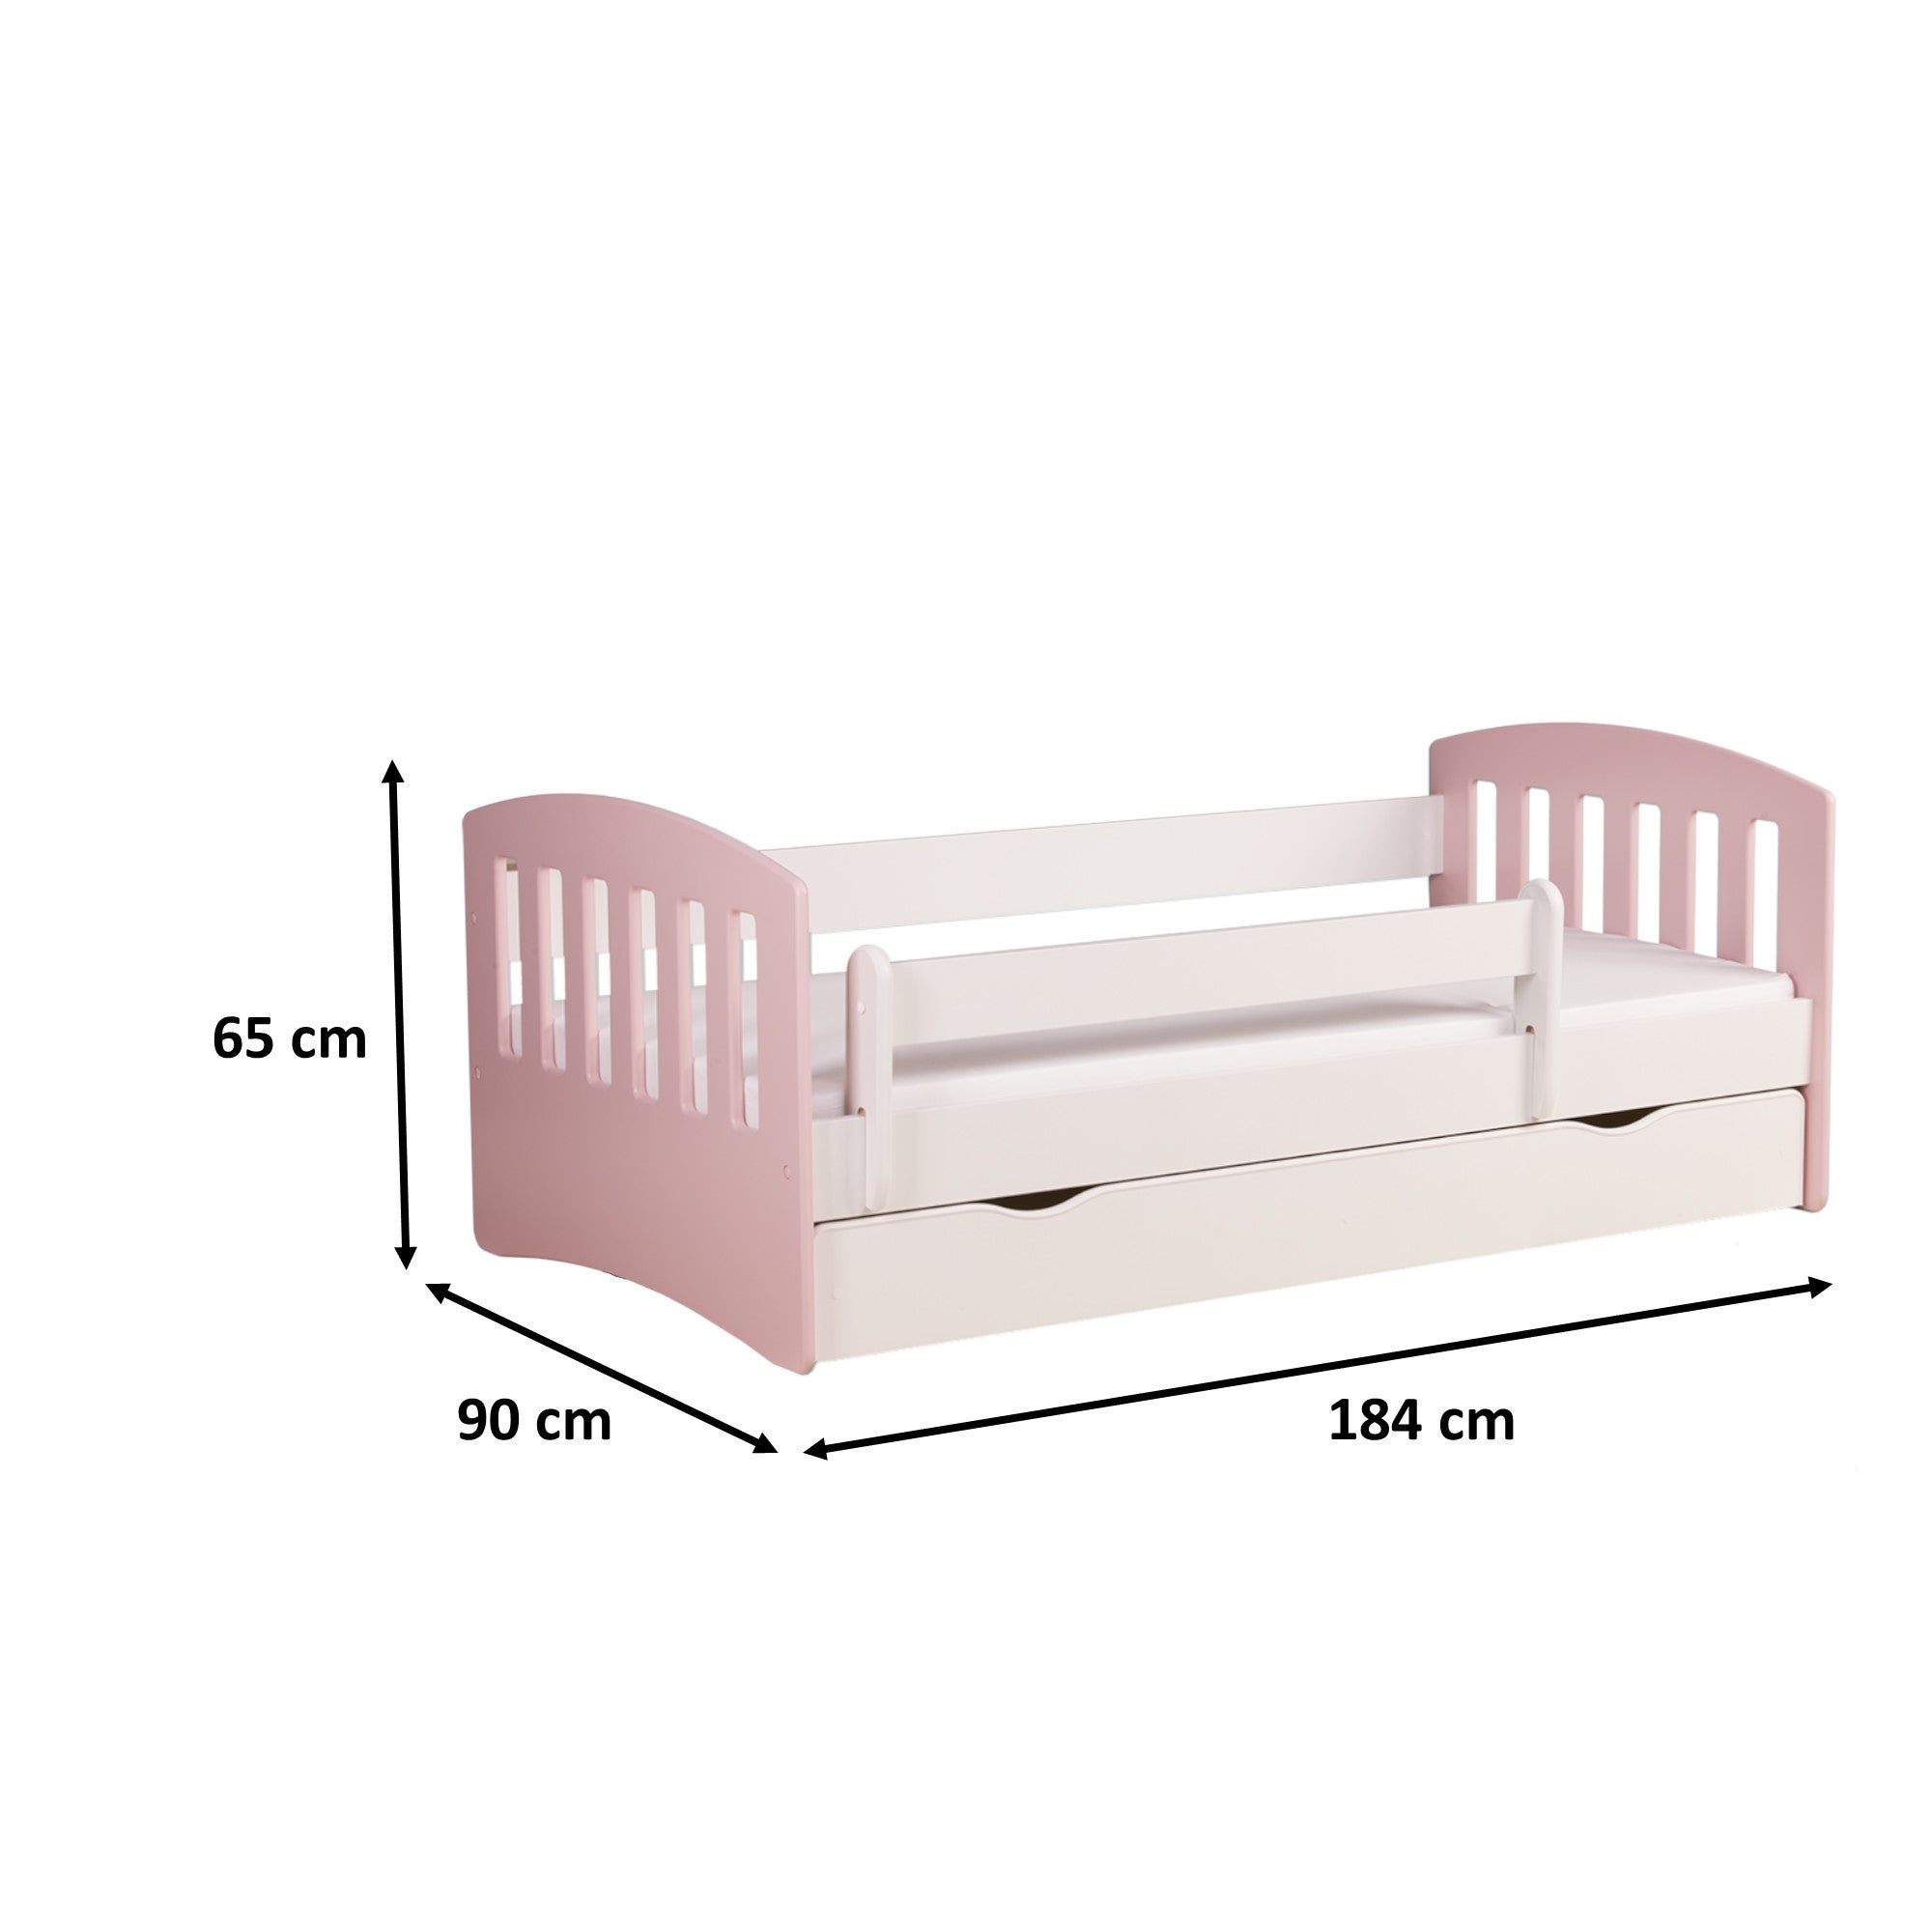 Kinderbett Robin inkl. Rollrost + Matratze + Bettschublade in rosa 80*140, 80*160 oder 80*180 cm